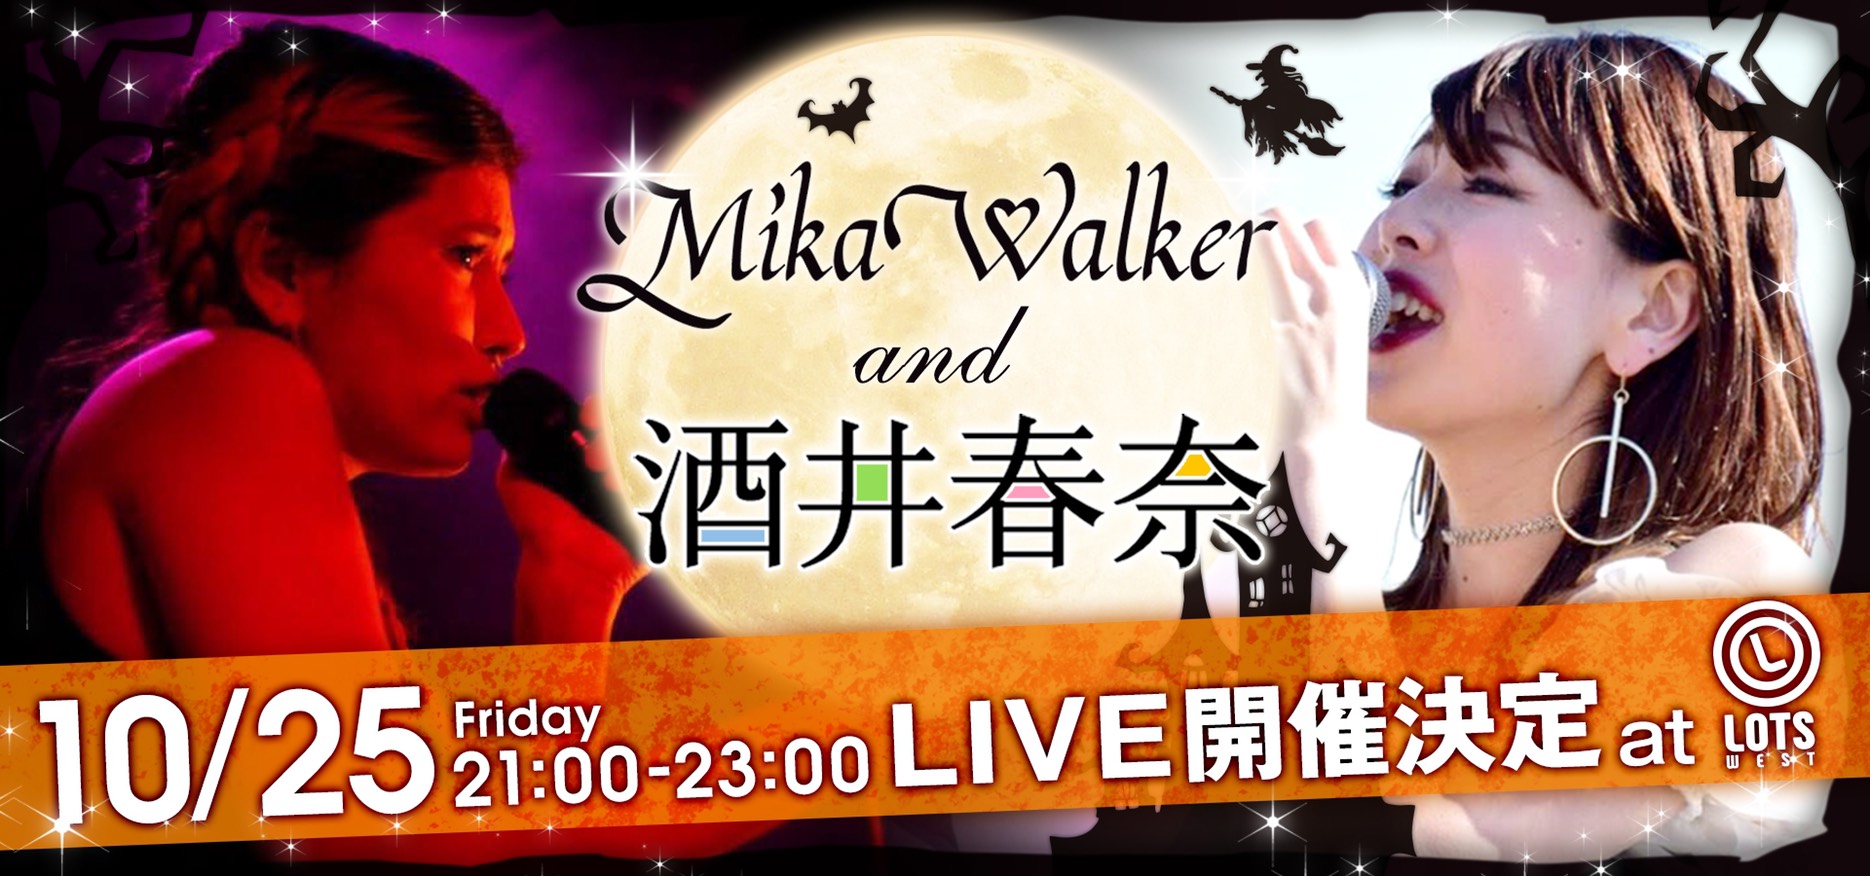 【LIVE告知】MikaWalker and 酒井春奈  ハロウィンLive開催決定‼︎ 10/25(Fri)